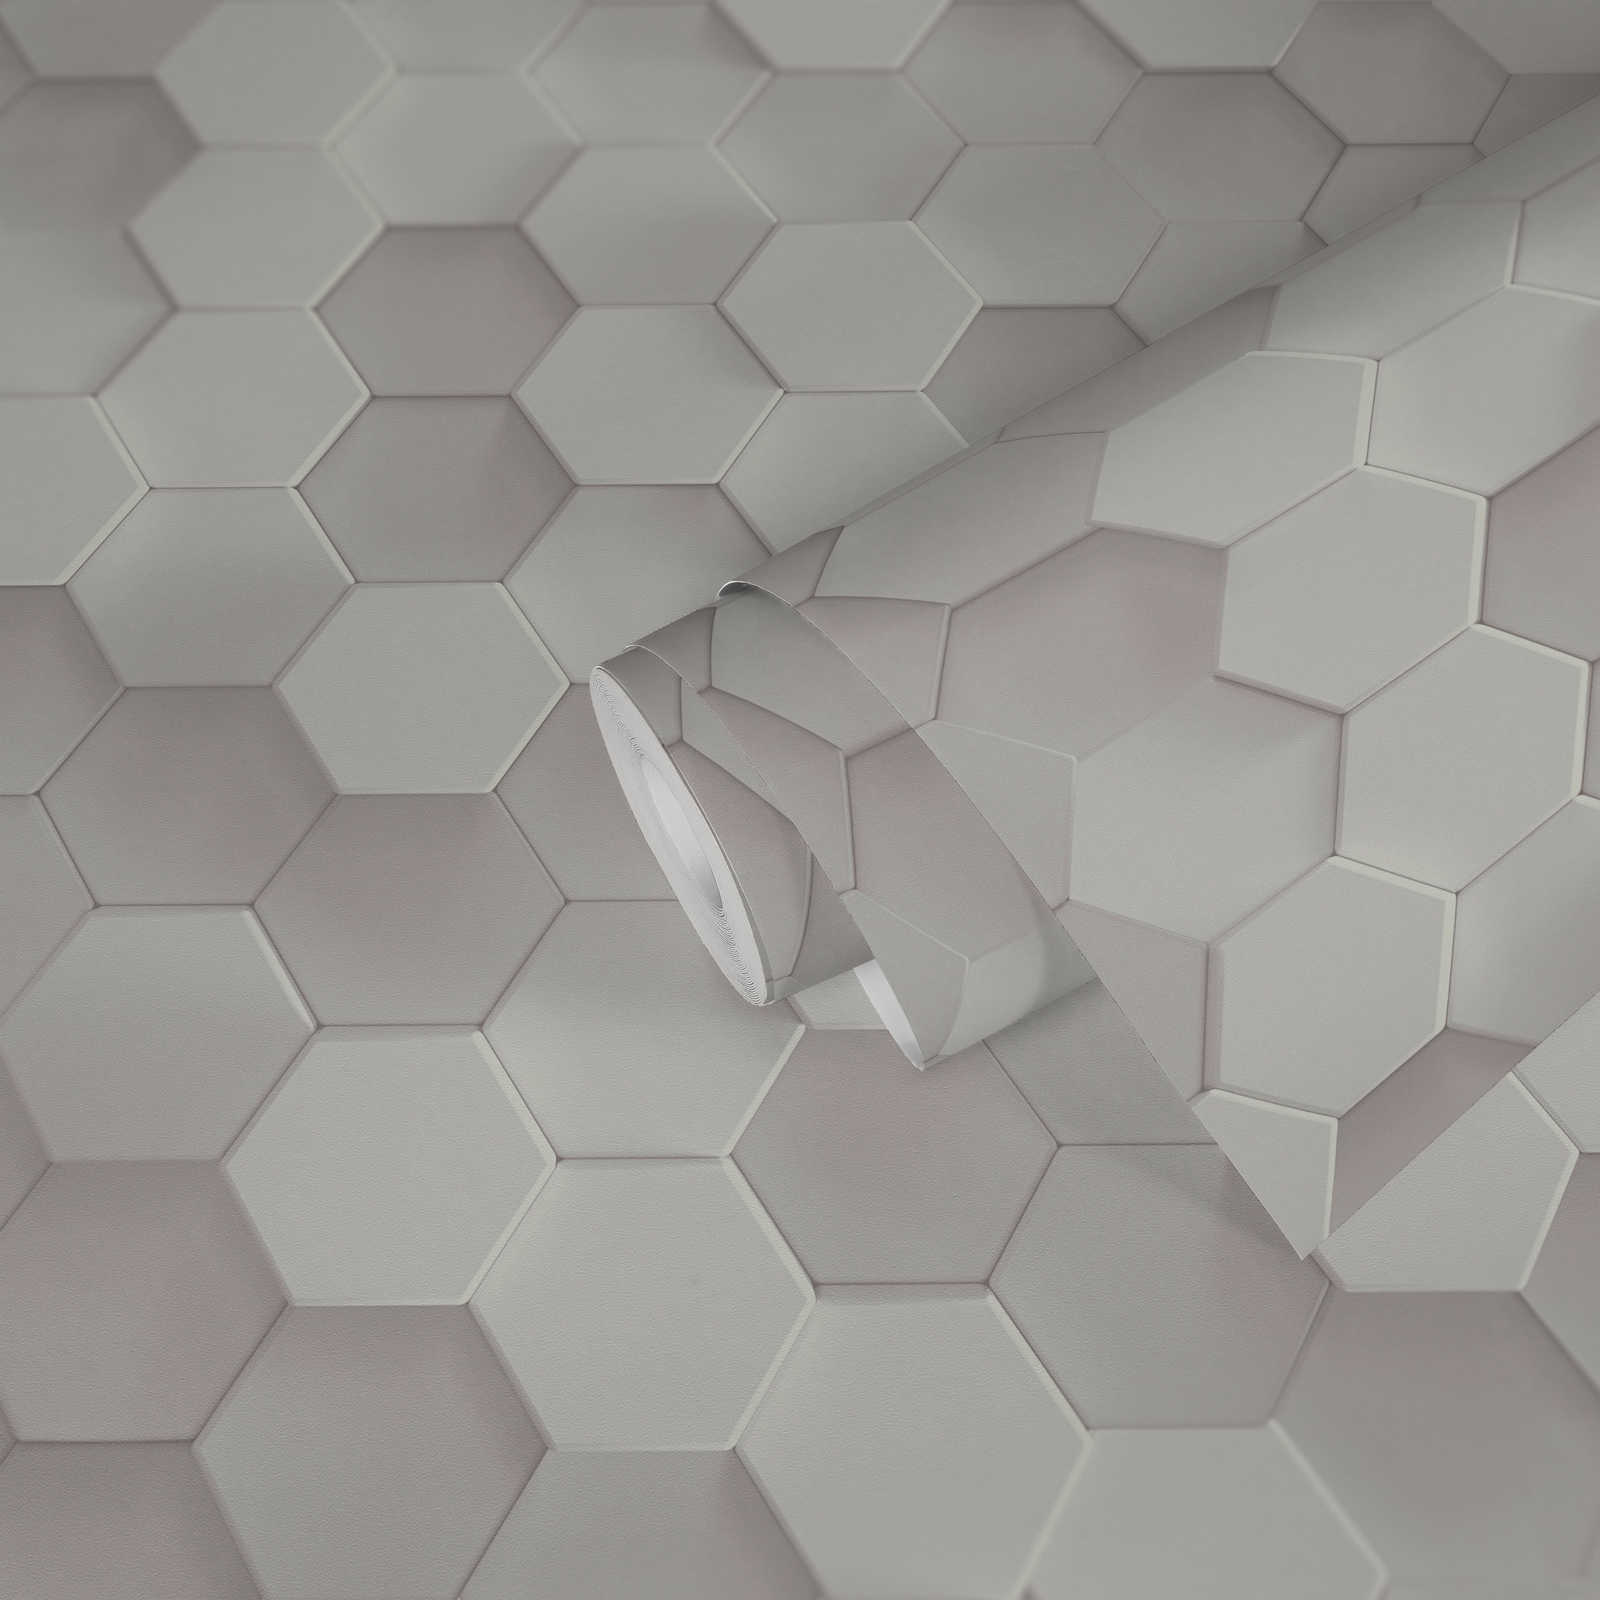             Papel pintado 3D hexágono patrón gráfico nido de abeja - blanco
        